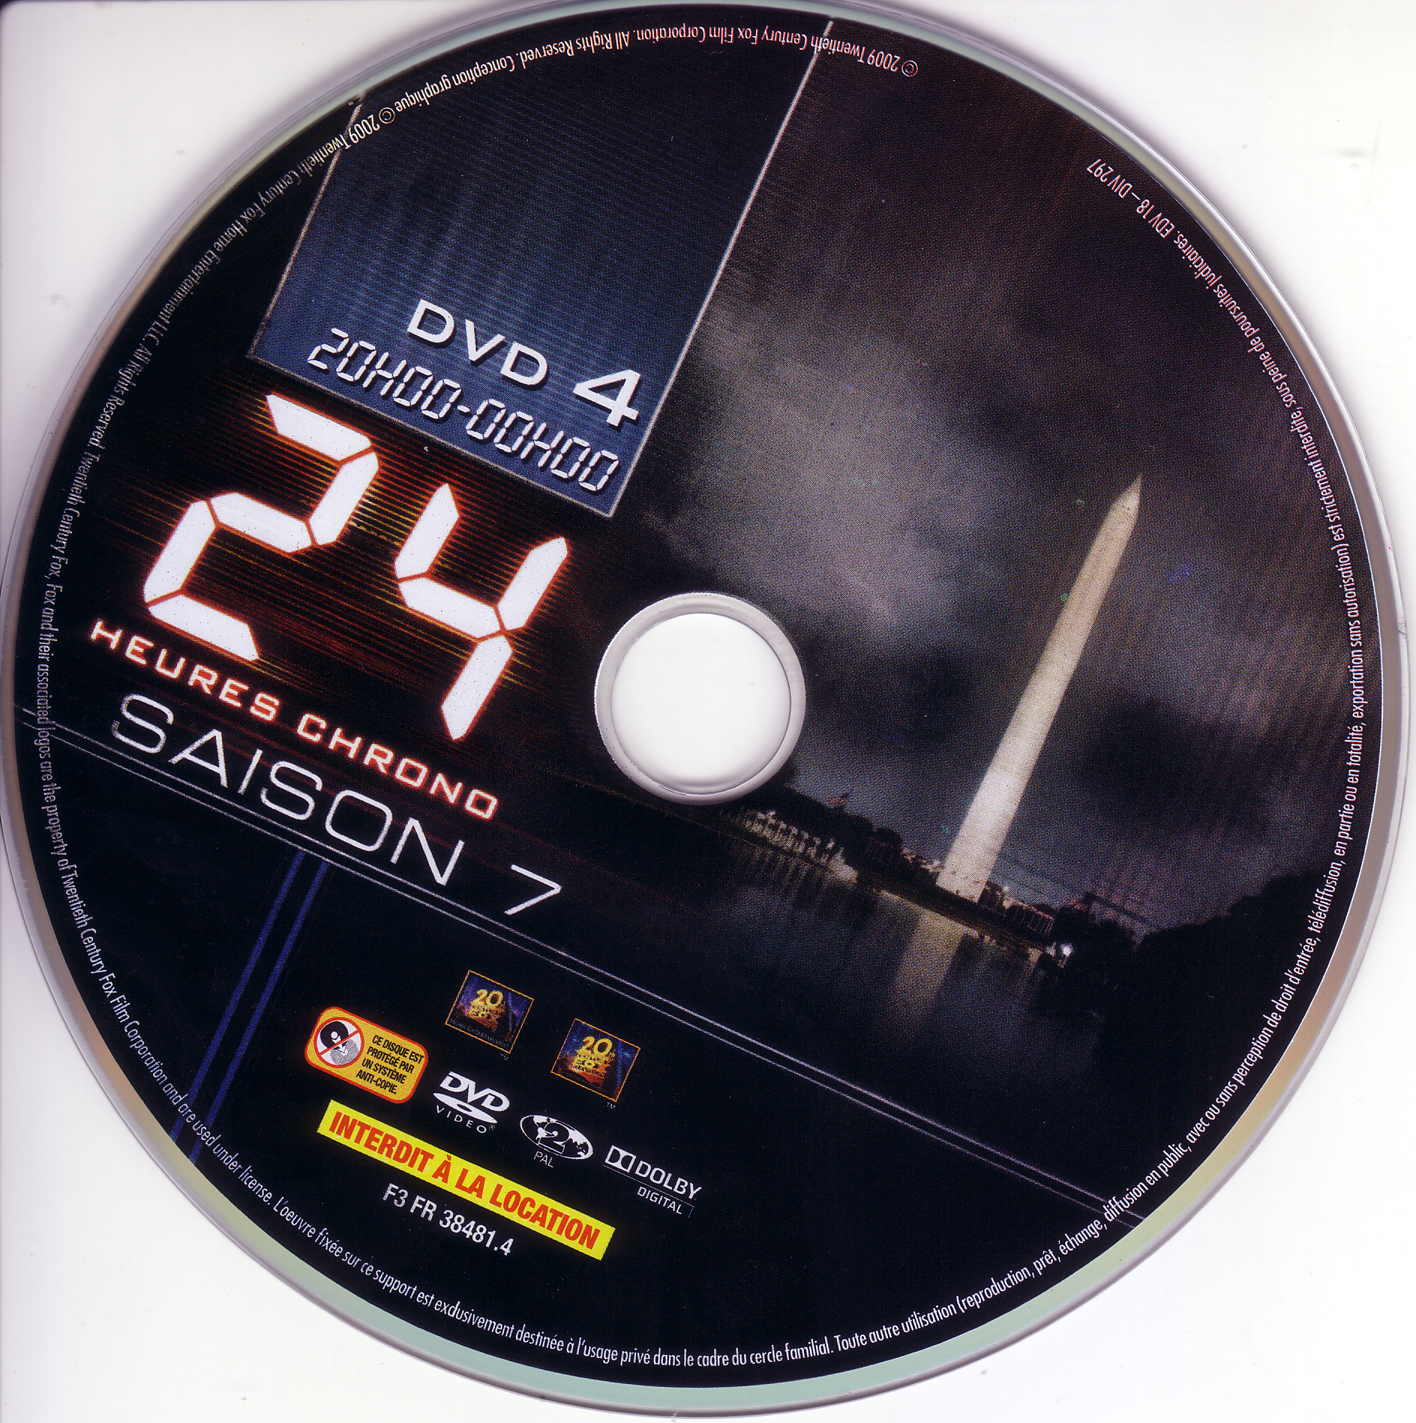 24 heures chrono Saison 7 DVD 4